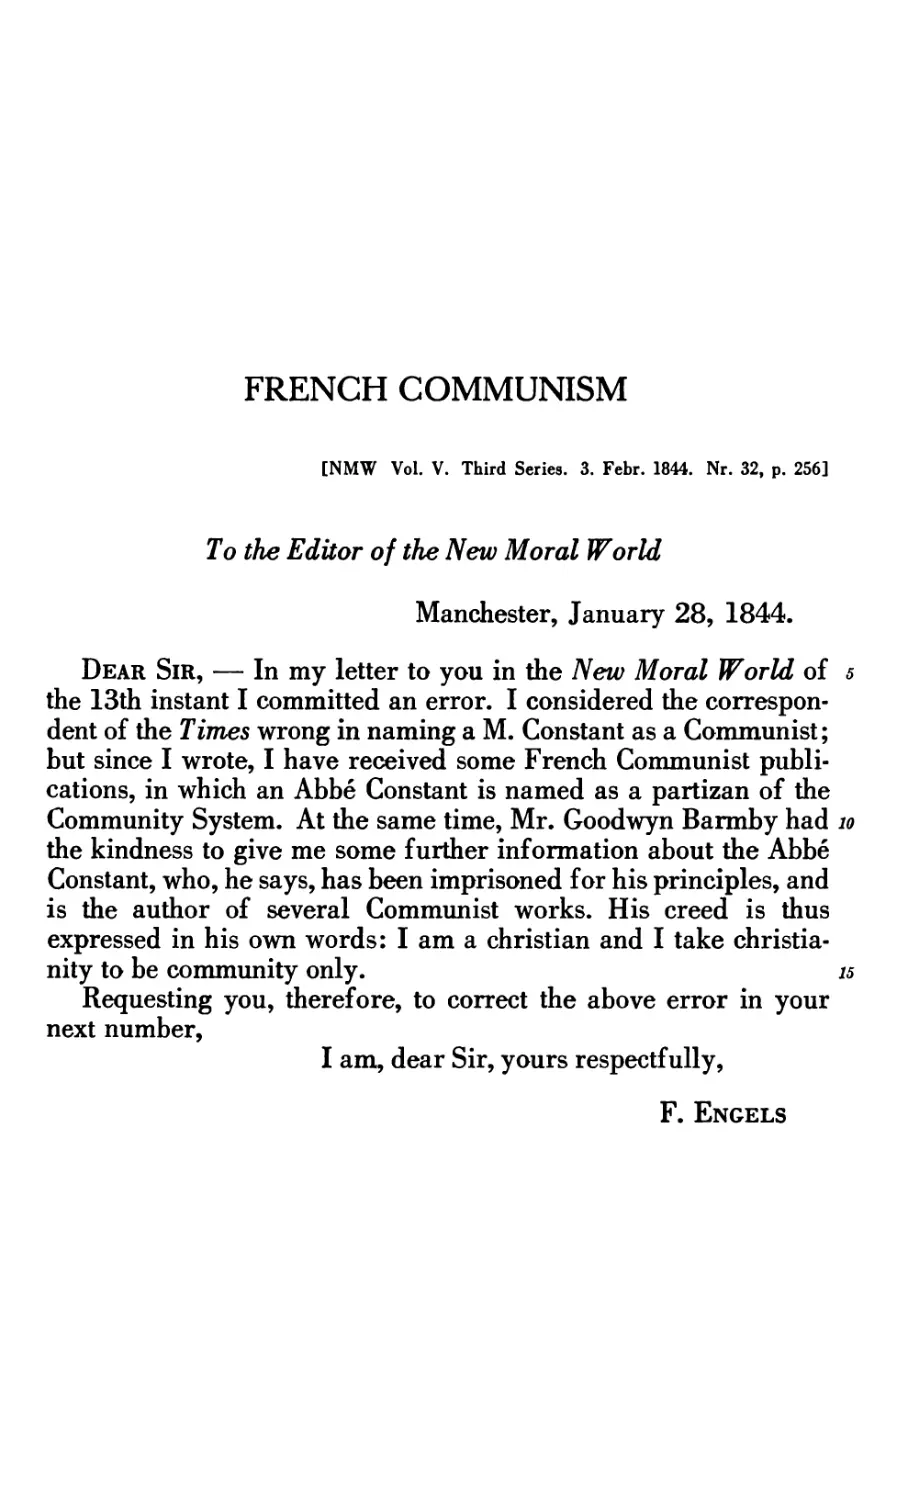 French Communism